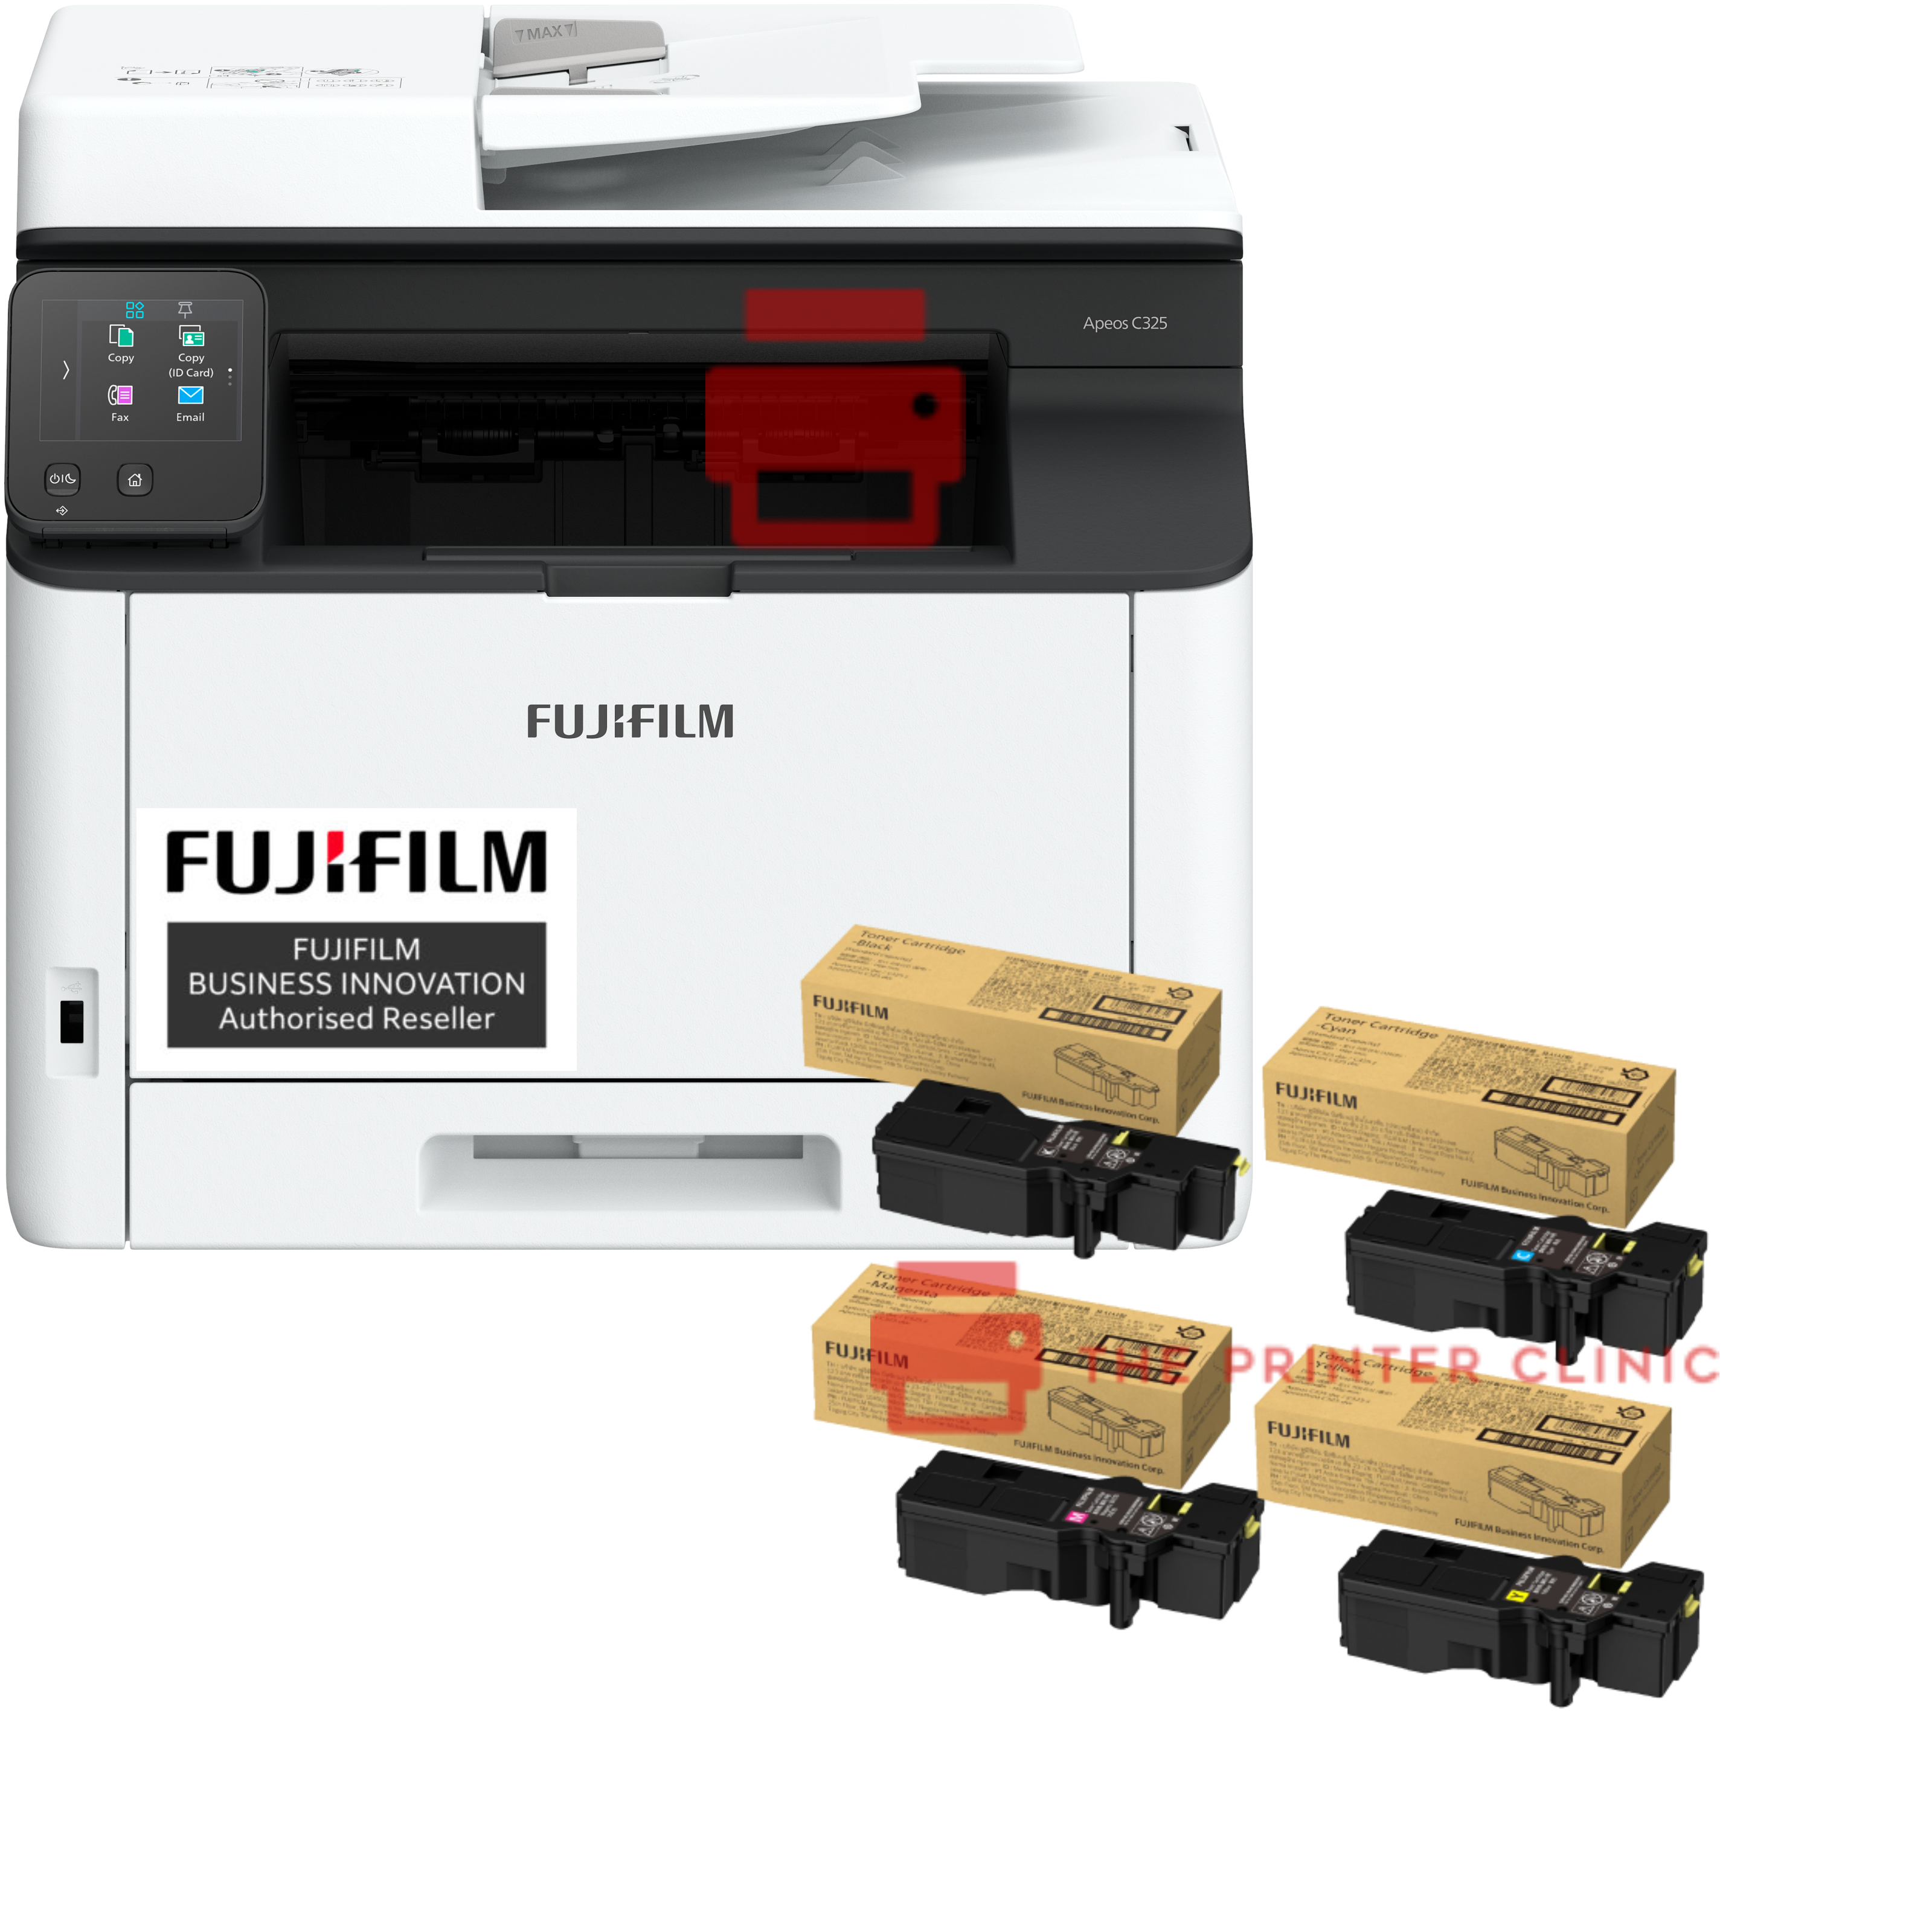 FUJIFILM Apeos C325z A4 Colour Multifunction Printer + Extra Set Of Toner + Bonus 3Y WTY